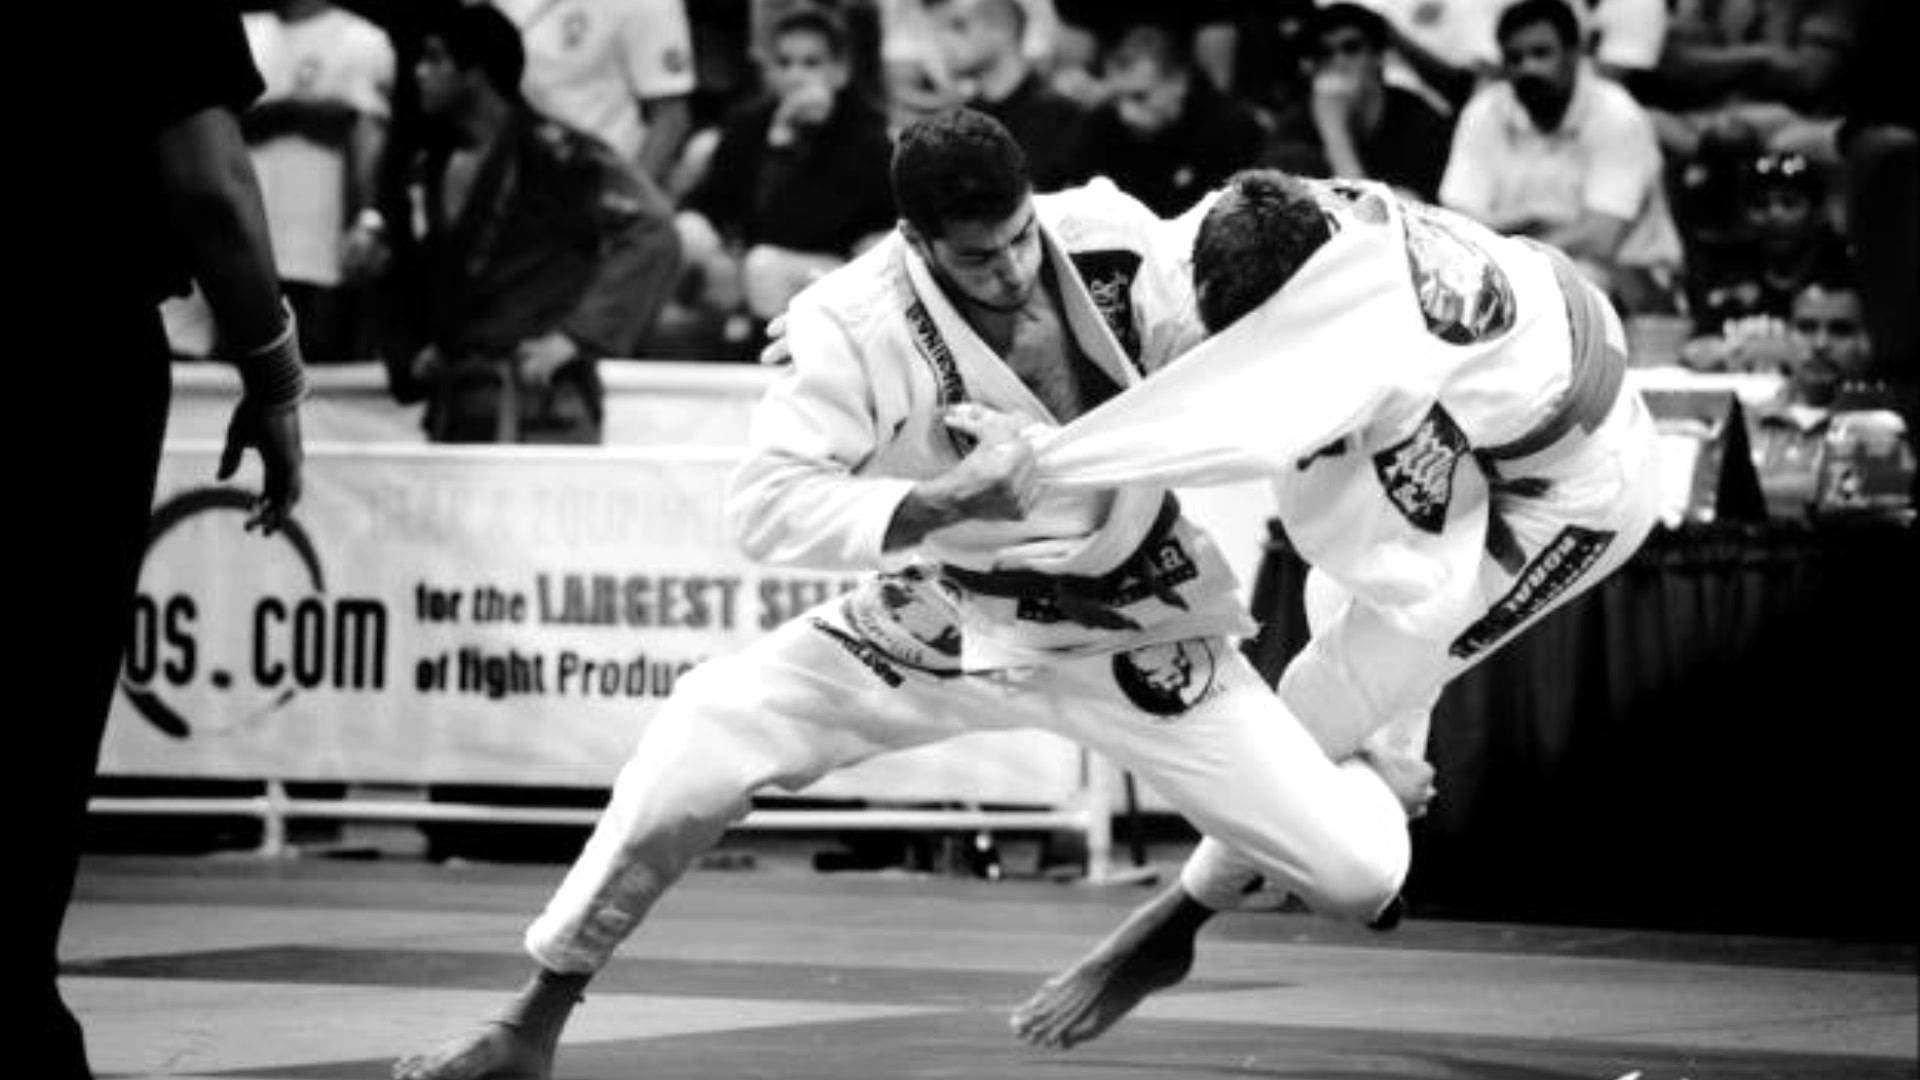 jiu jitsu wallpapers,sports,judo,contact sport,combat sport,individual sports